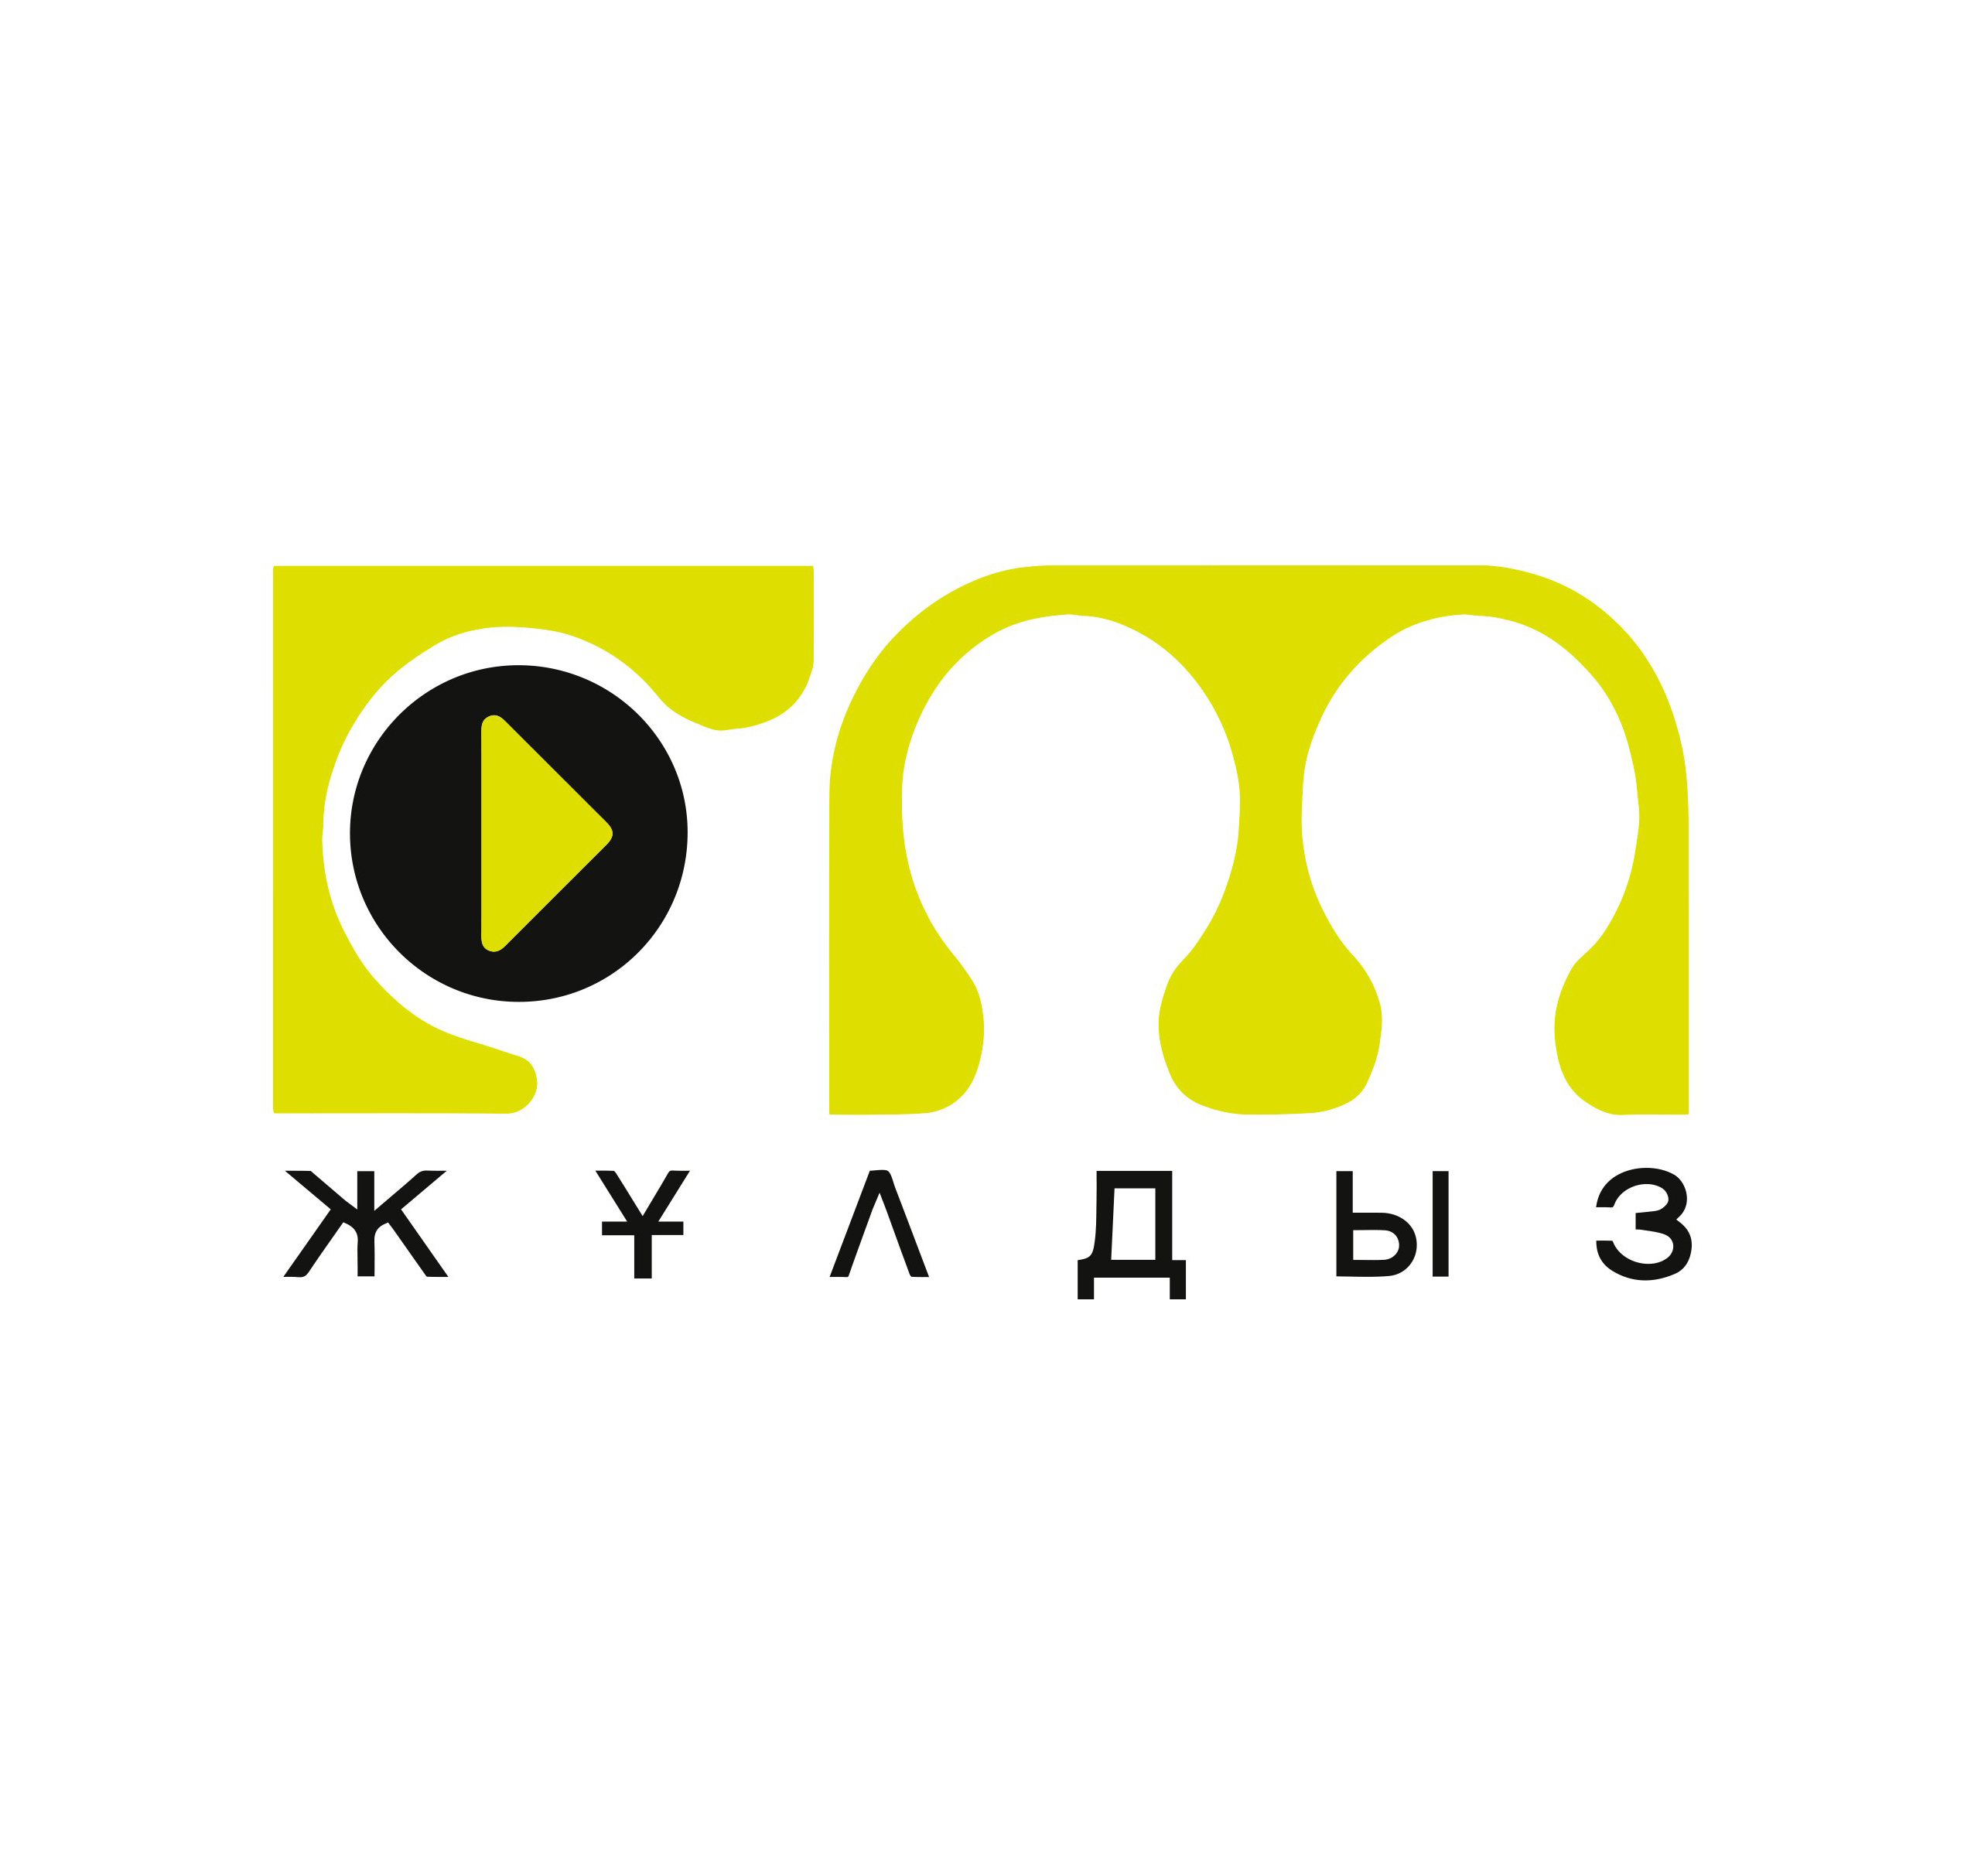 Включи казахстанское радио. Радио Казахстан. Логотипы радиостанций Казахстана. Казахская радиостанция. Радио Люкс fm логотип.